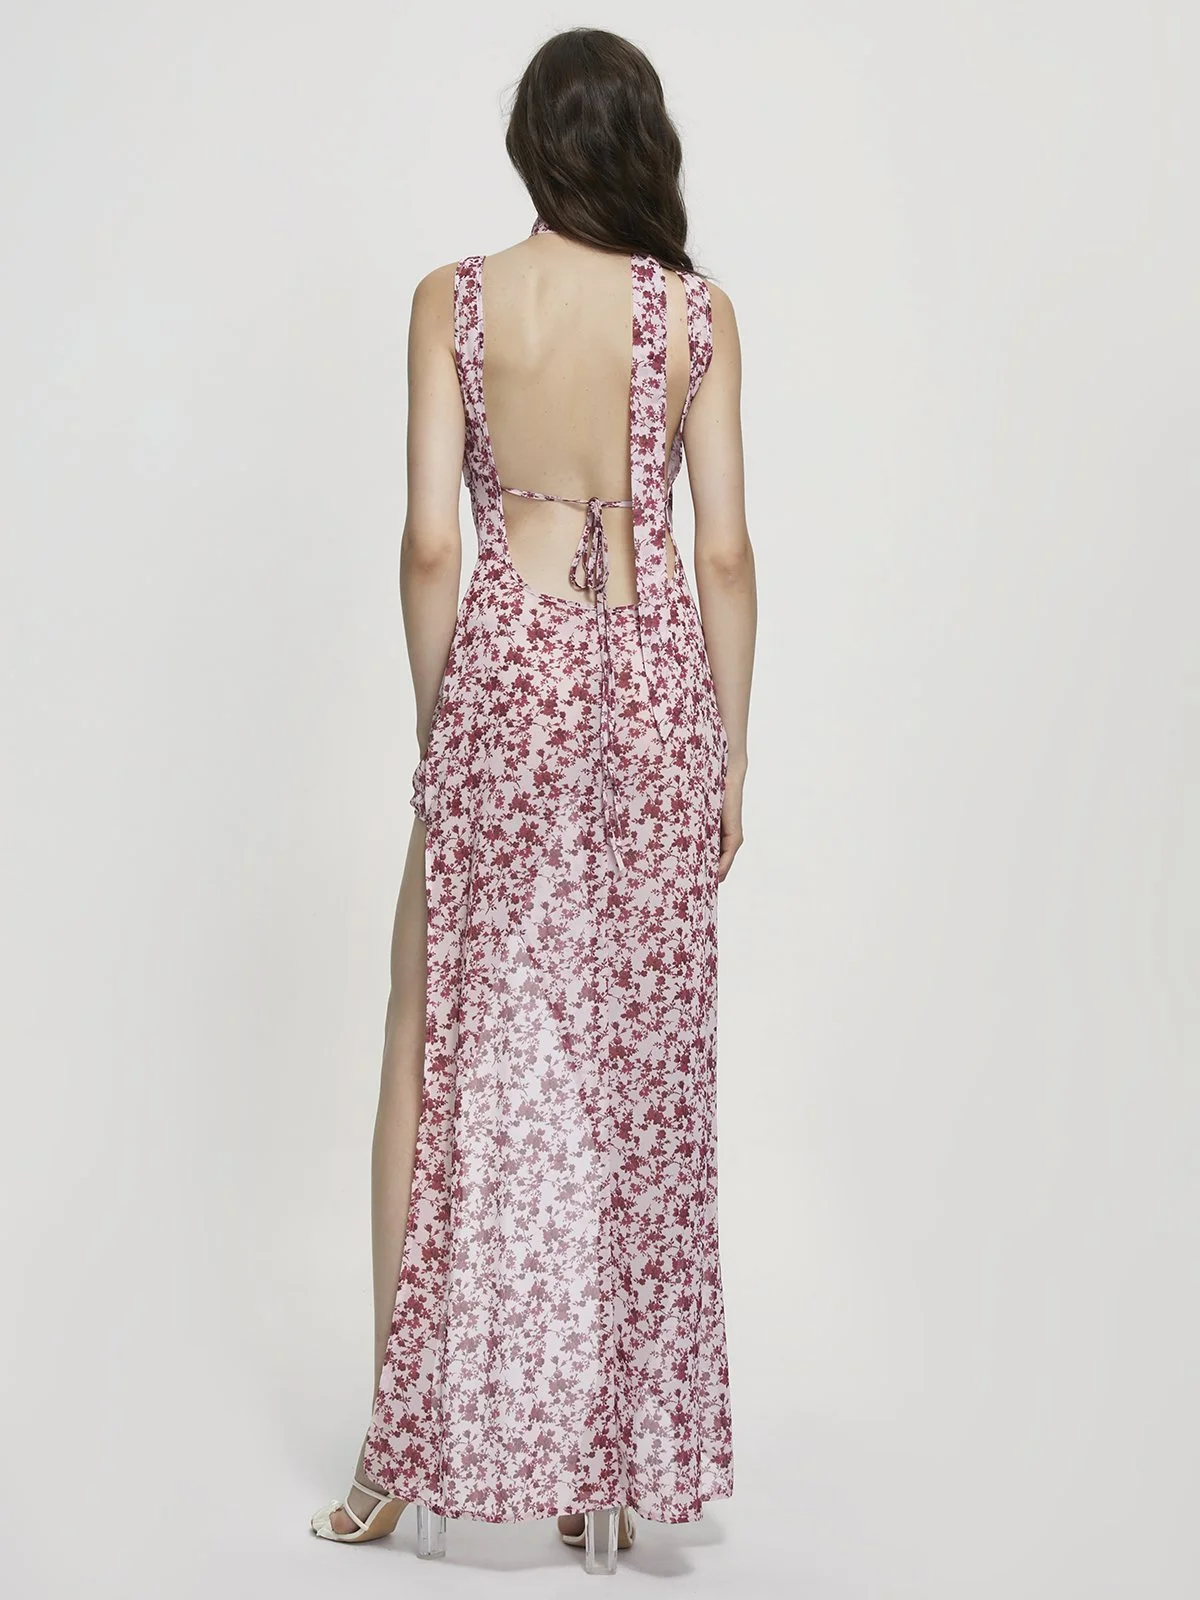 Backless Side Slit V Neck Floral Sleeveless Maxi Dress